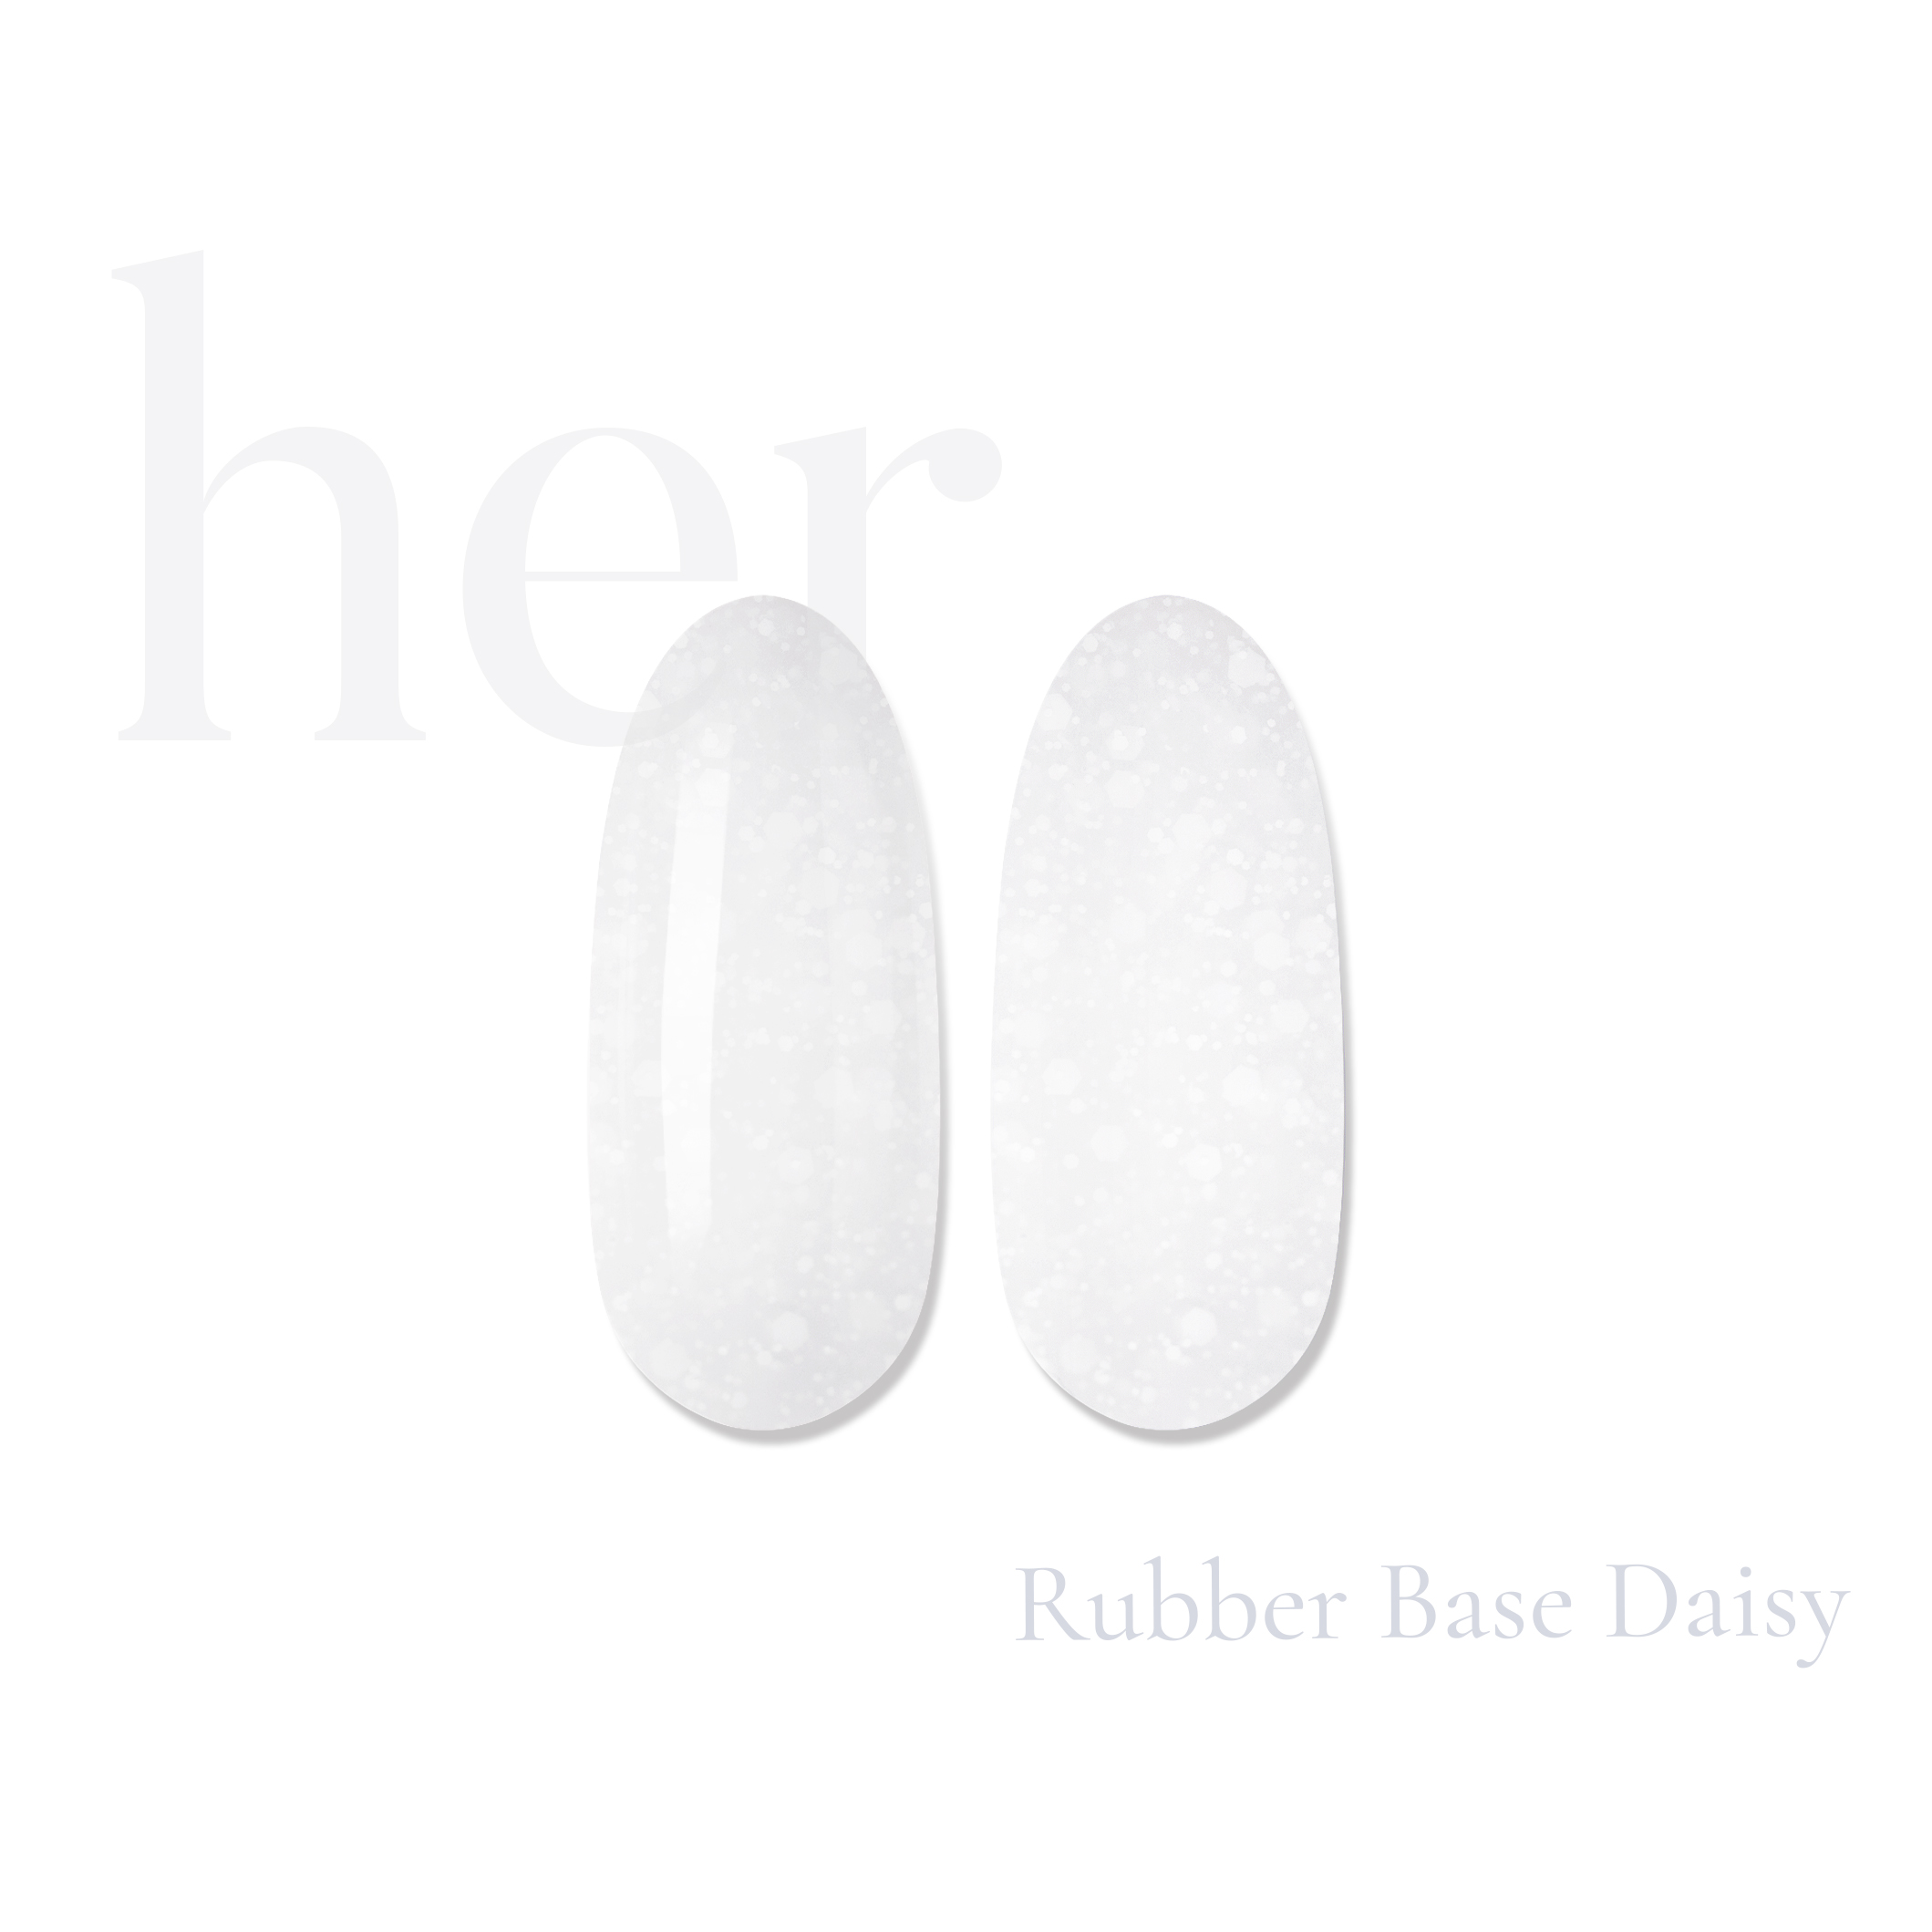 Rubber Base DAISY